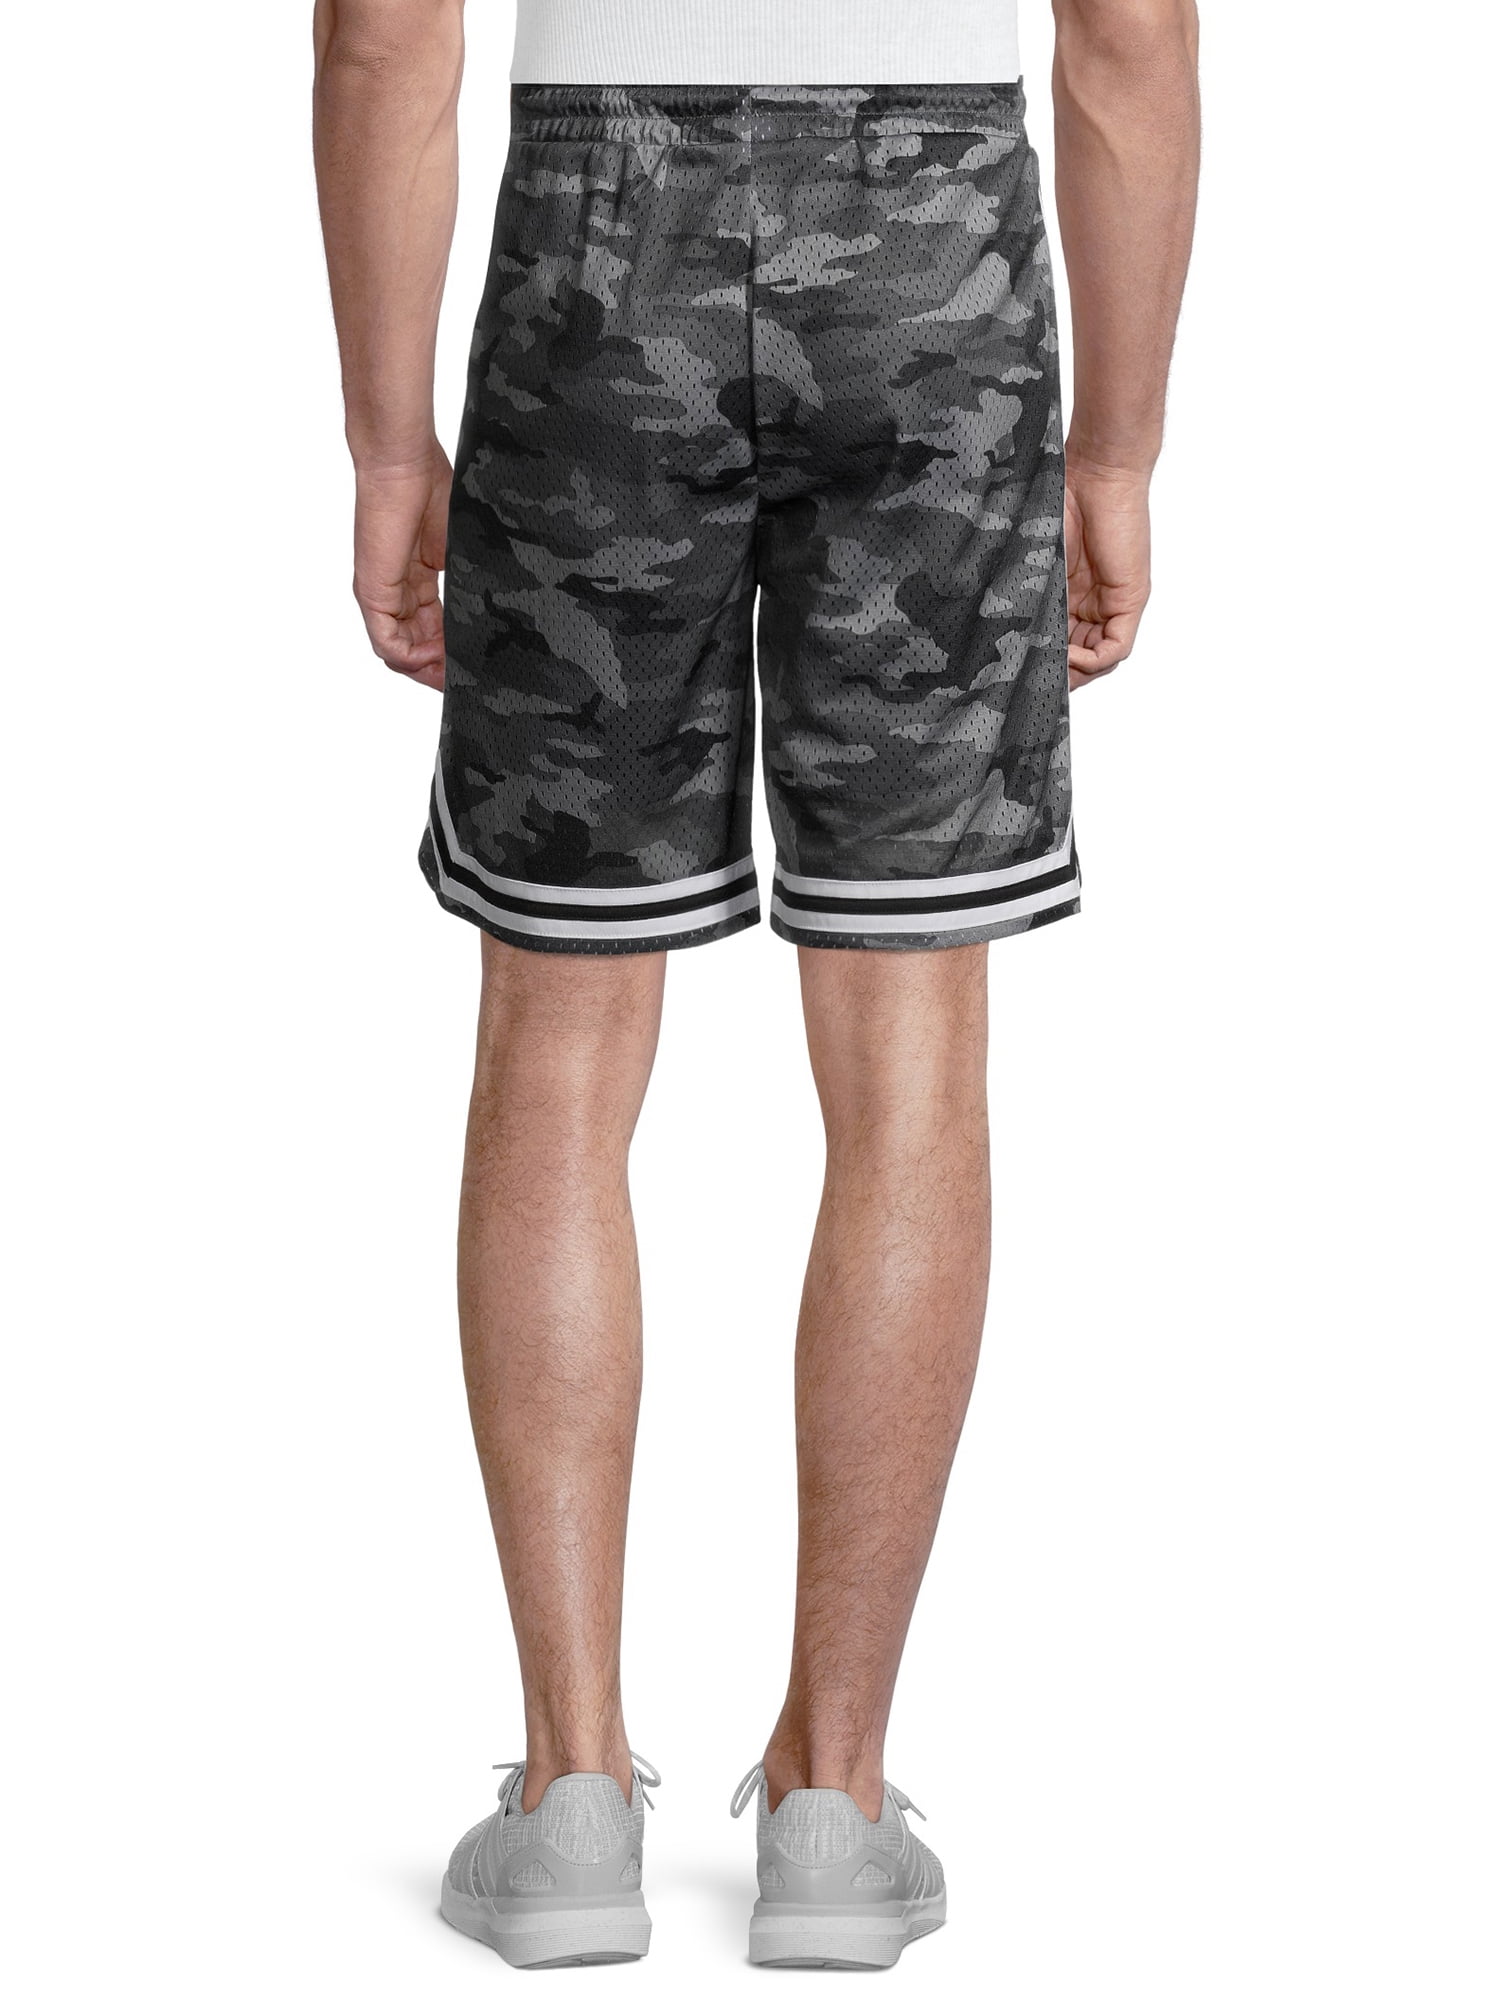 新品】Wall Pattern Mesh Shorts (slate) XL www.behiranpc.com